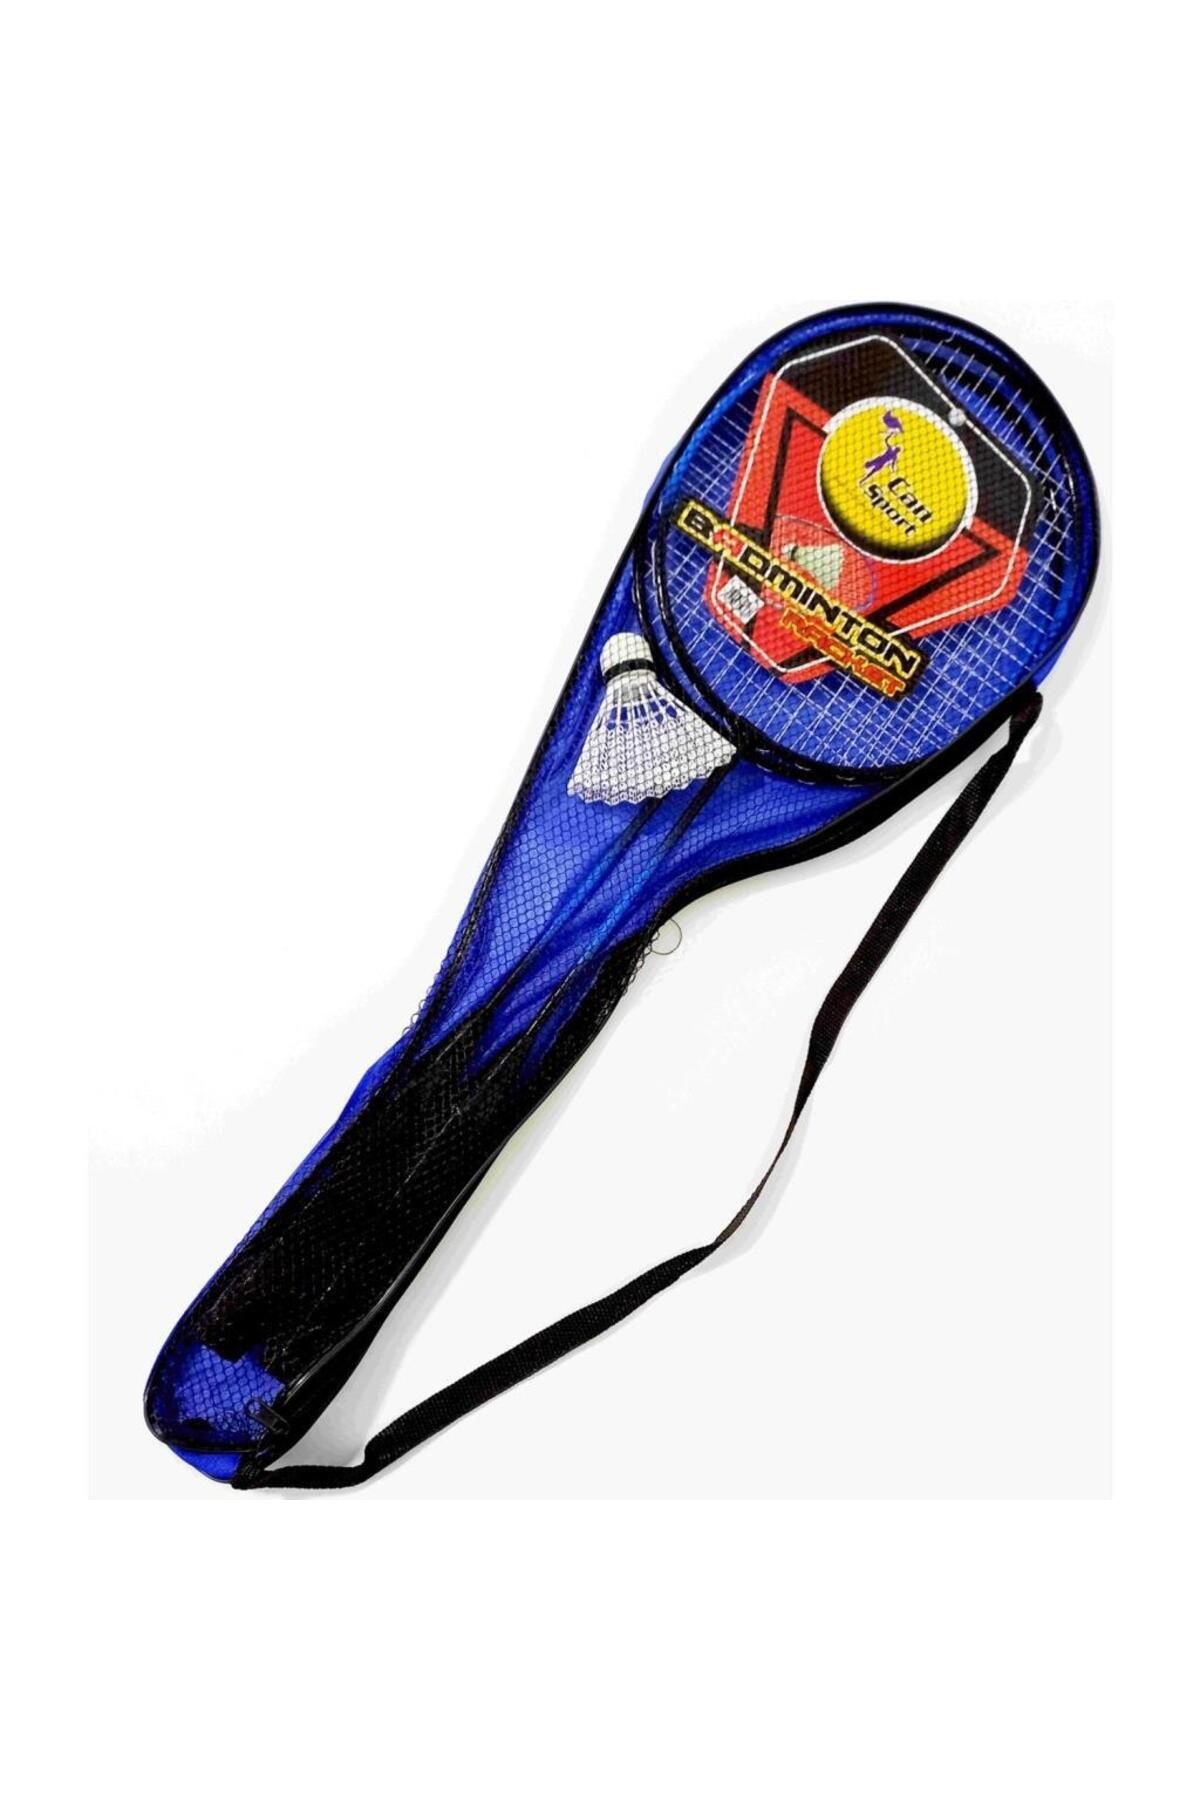 Astra Market Badminton Raket - 1609018 (Lisinya)